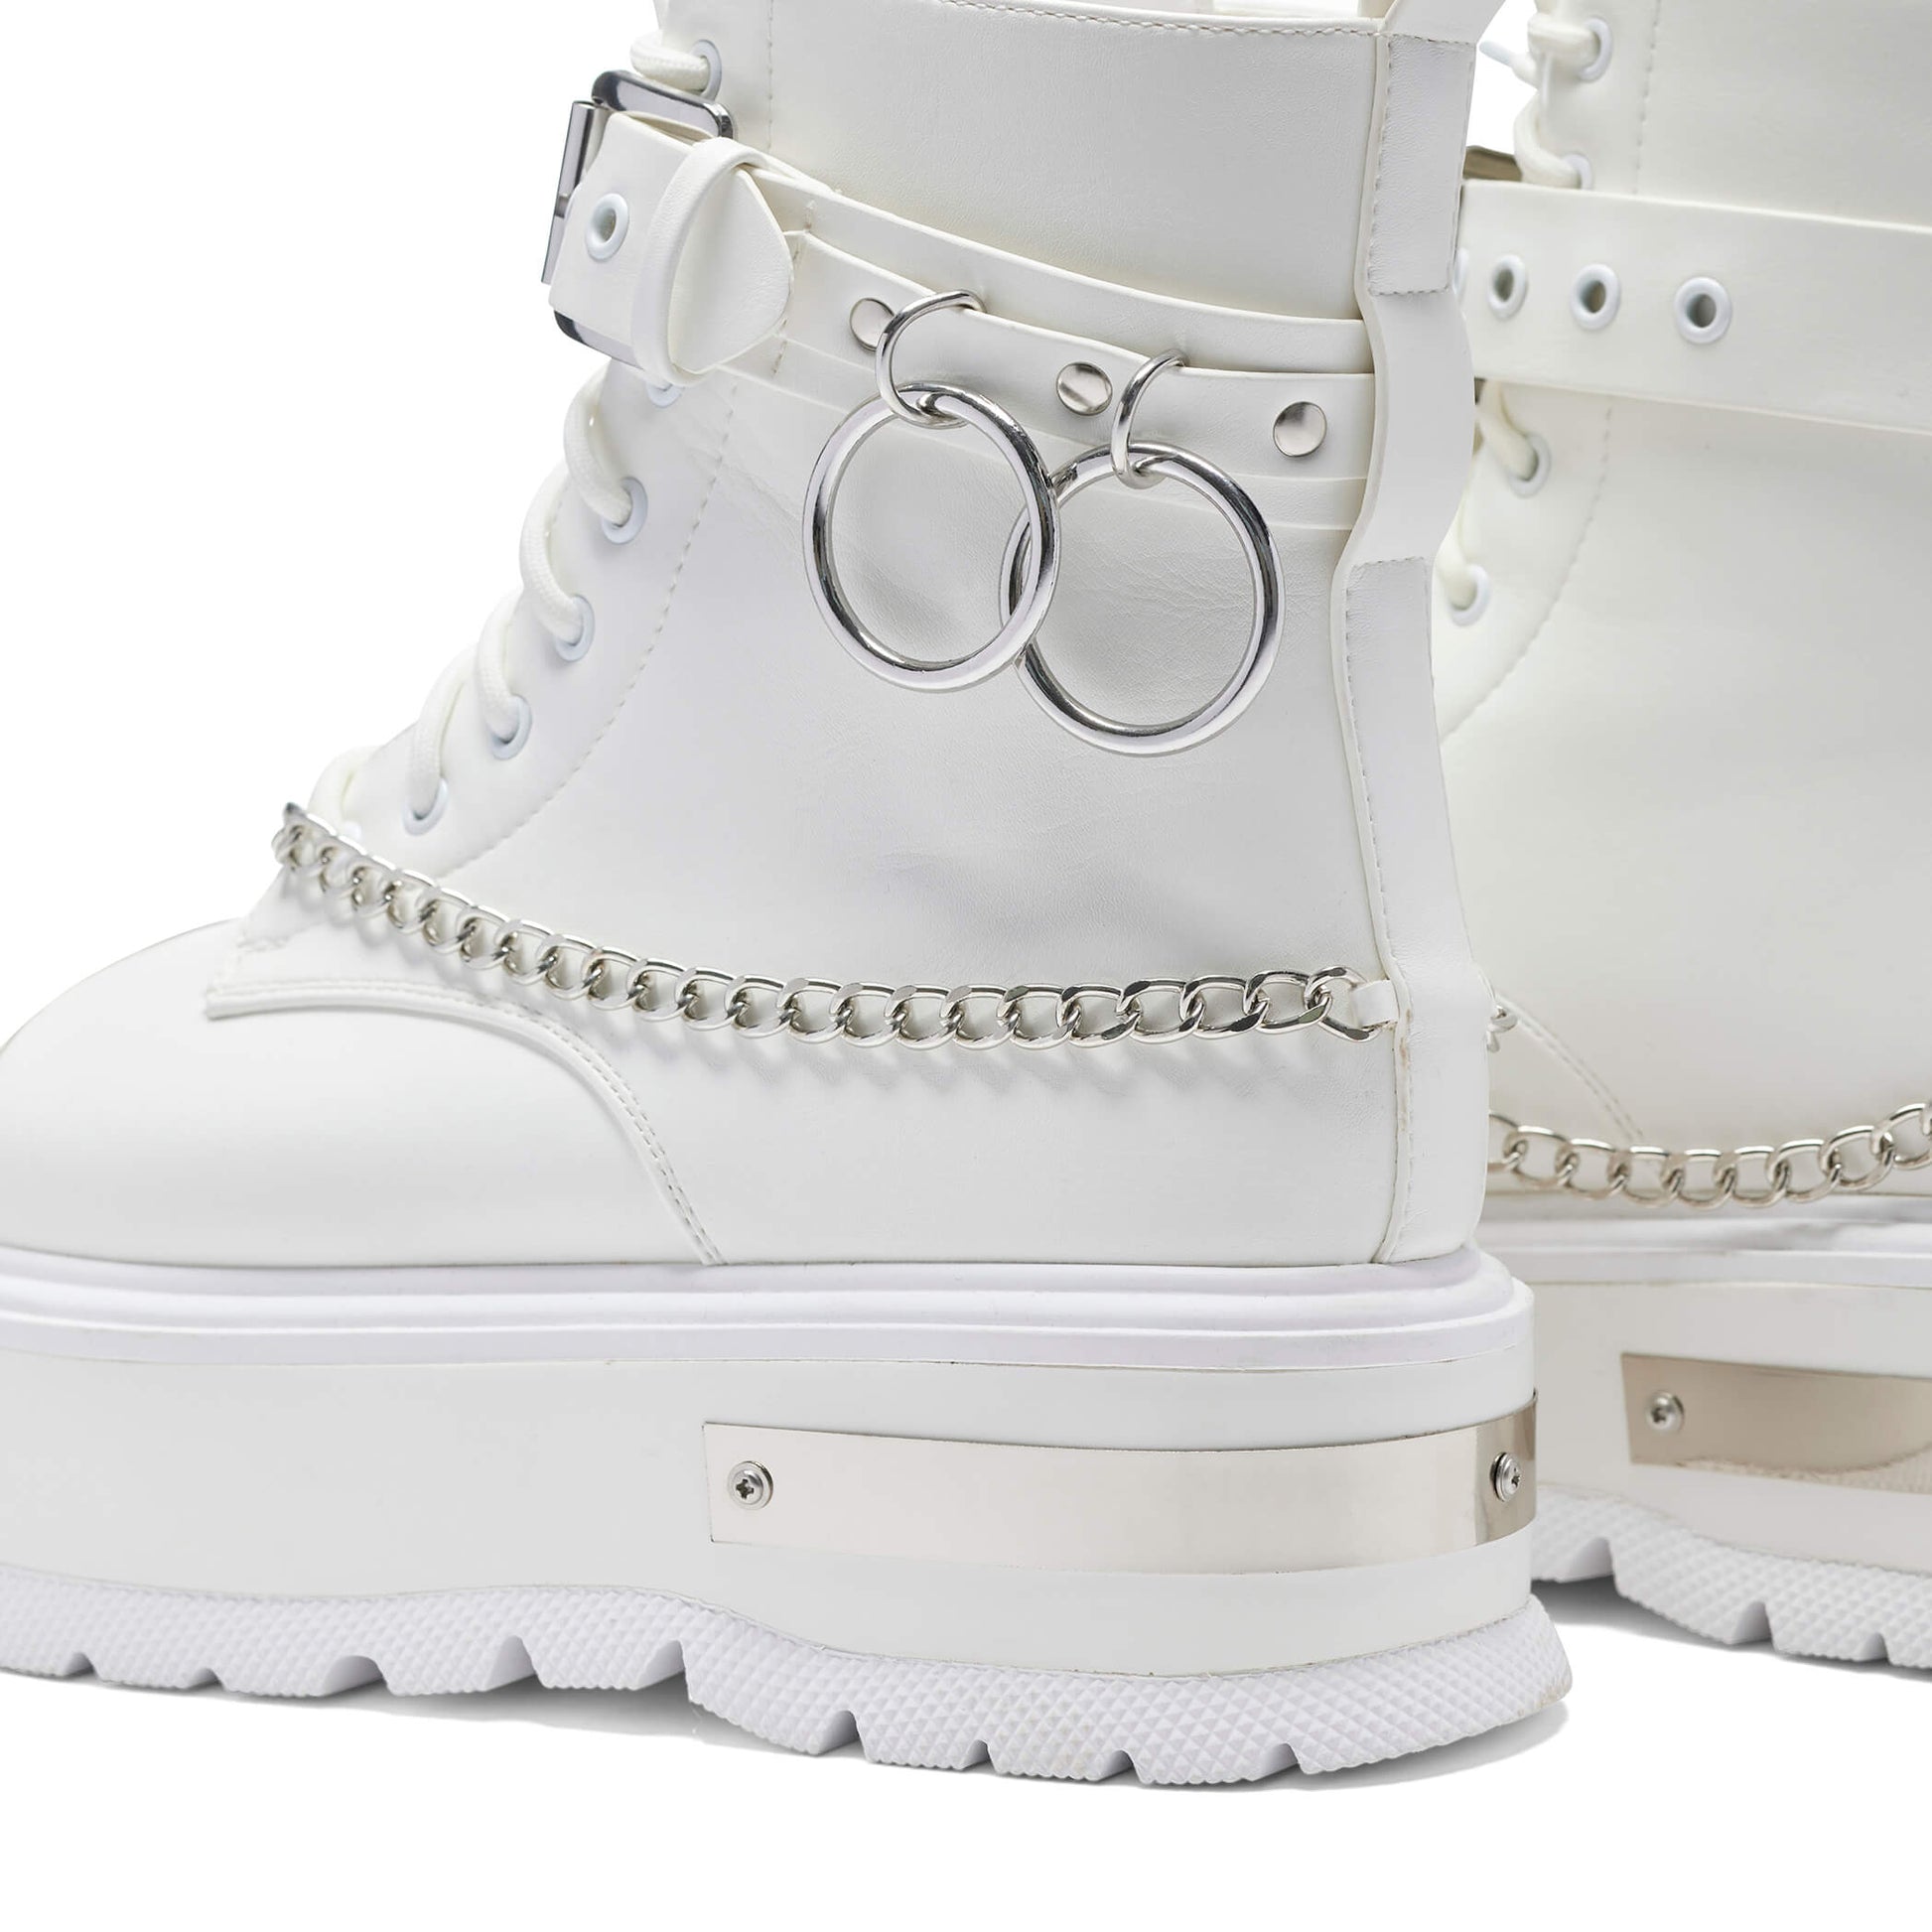 Borin Hardware Platform Boots - White - KOI Footwear - Material View